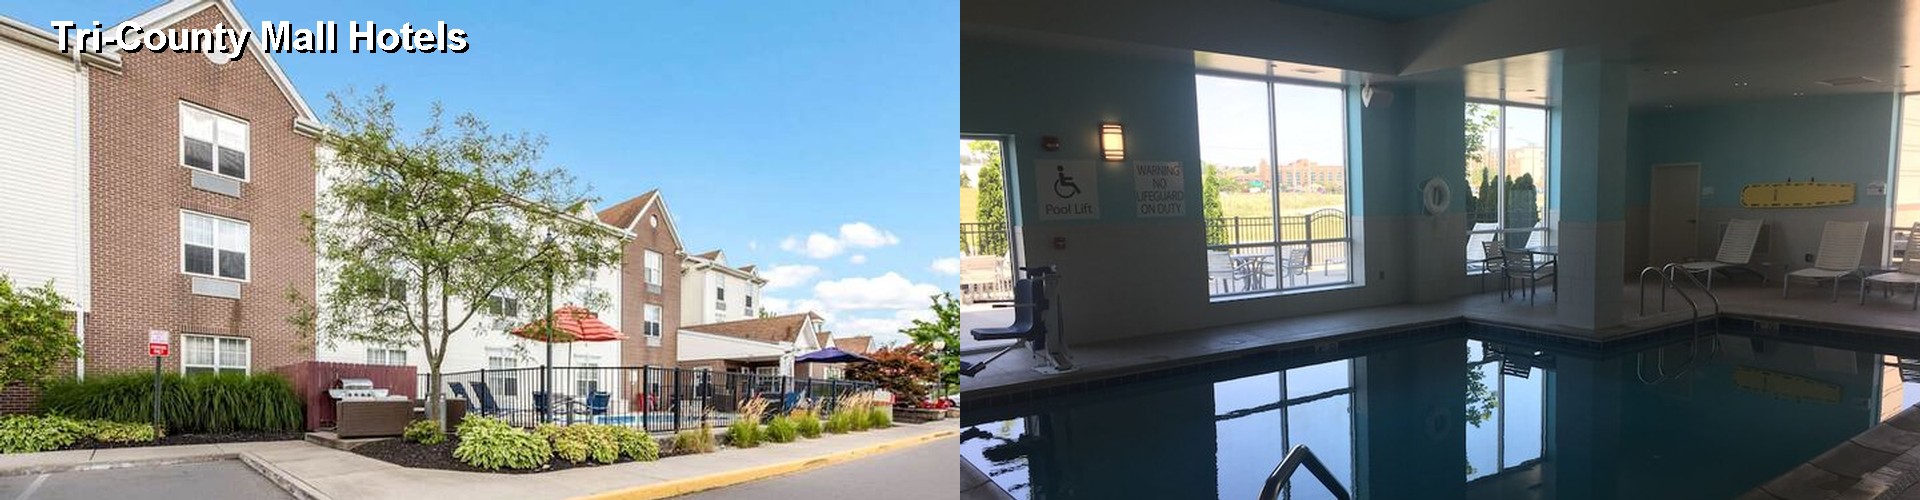 3 Best Hotels near Tri-County Mall